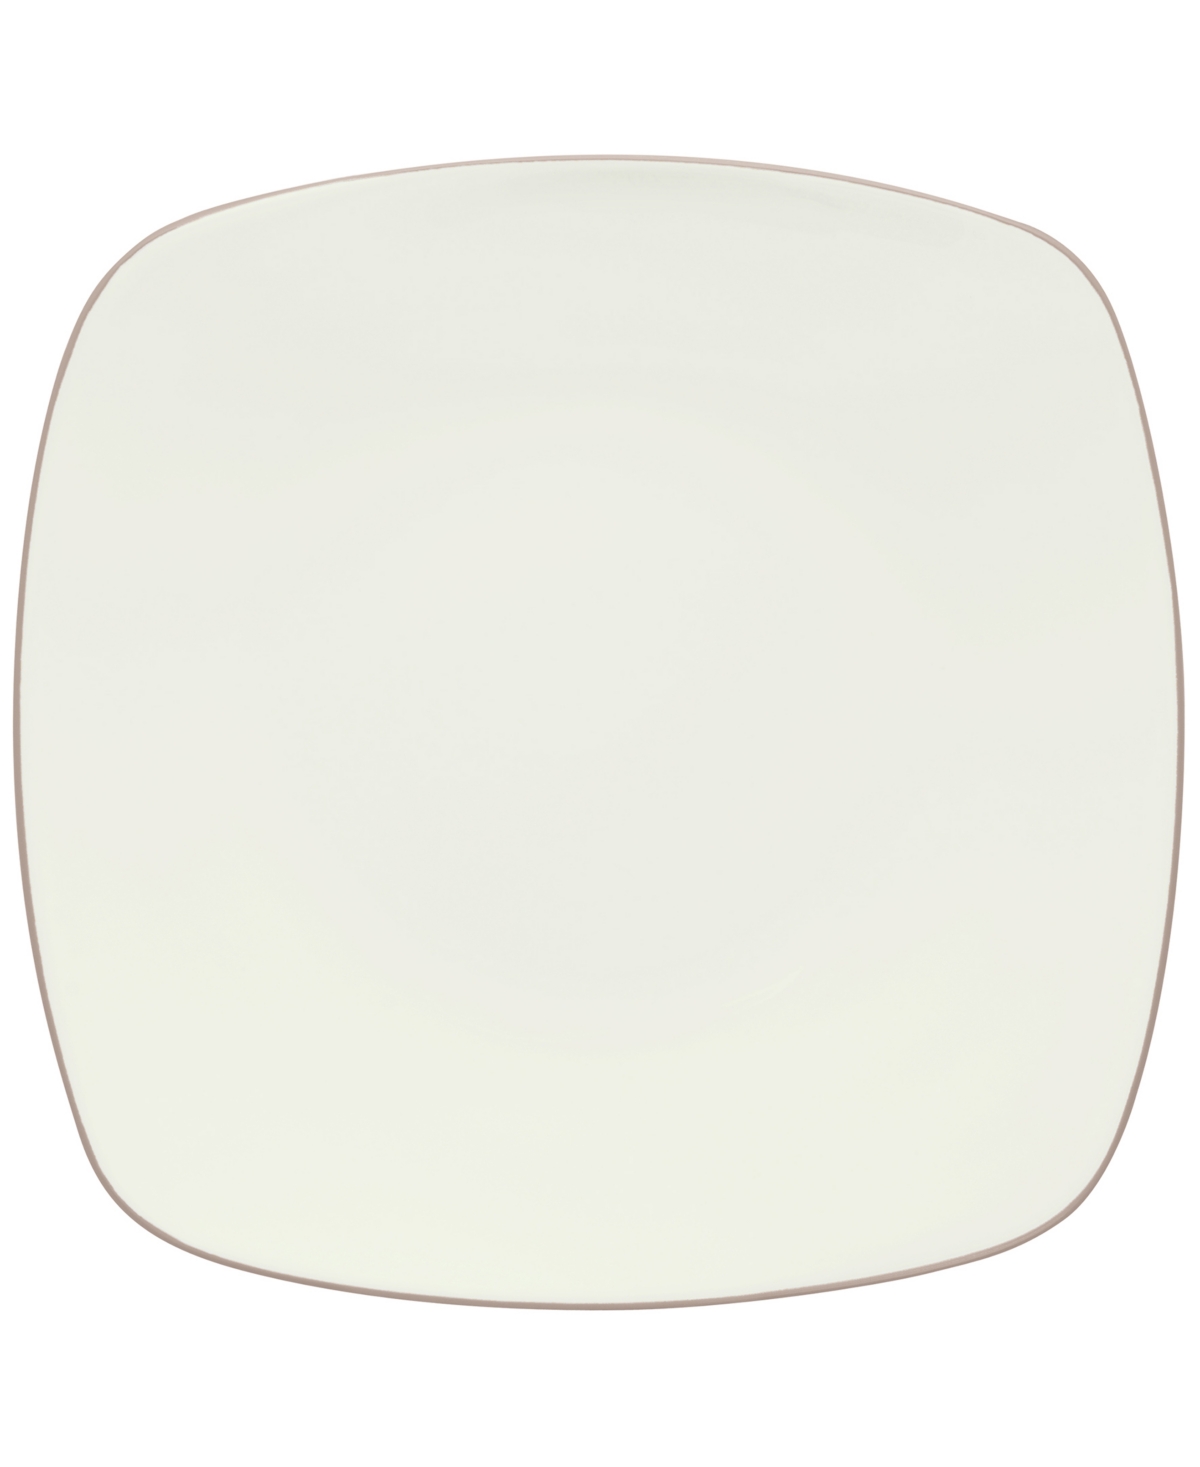 Noritake Colorwave Square Platter 11-3/4" In Clay